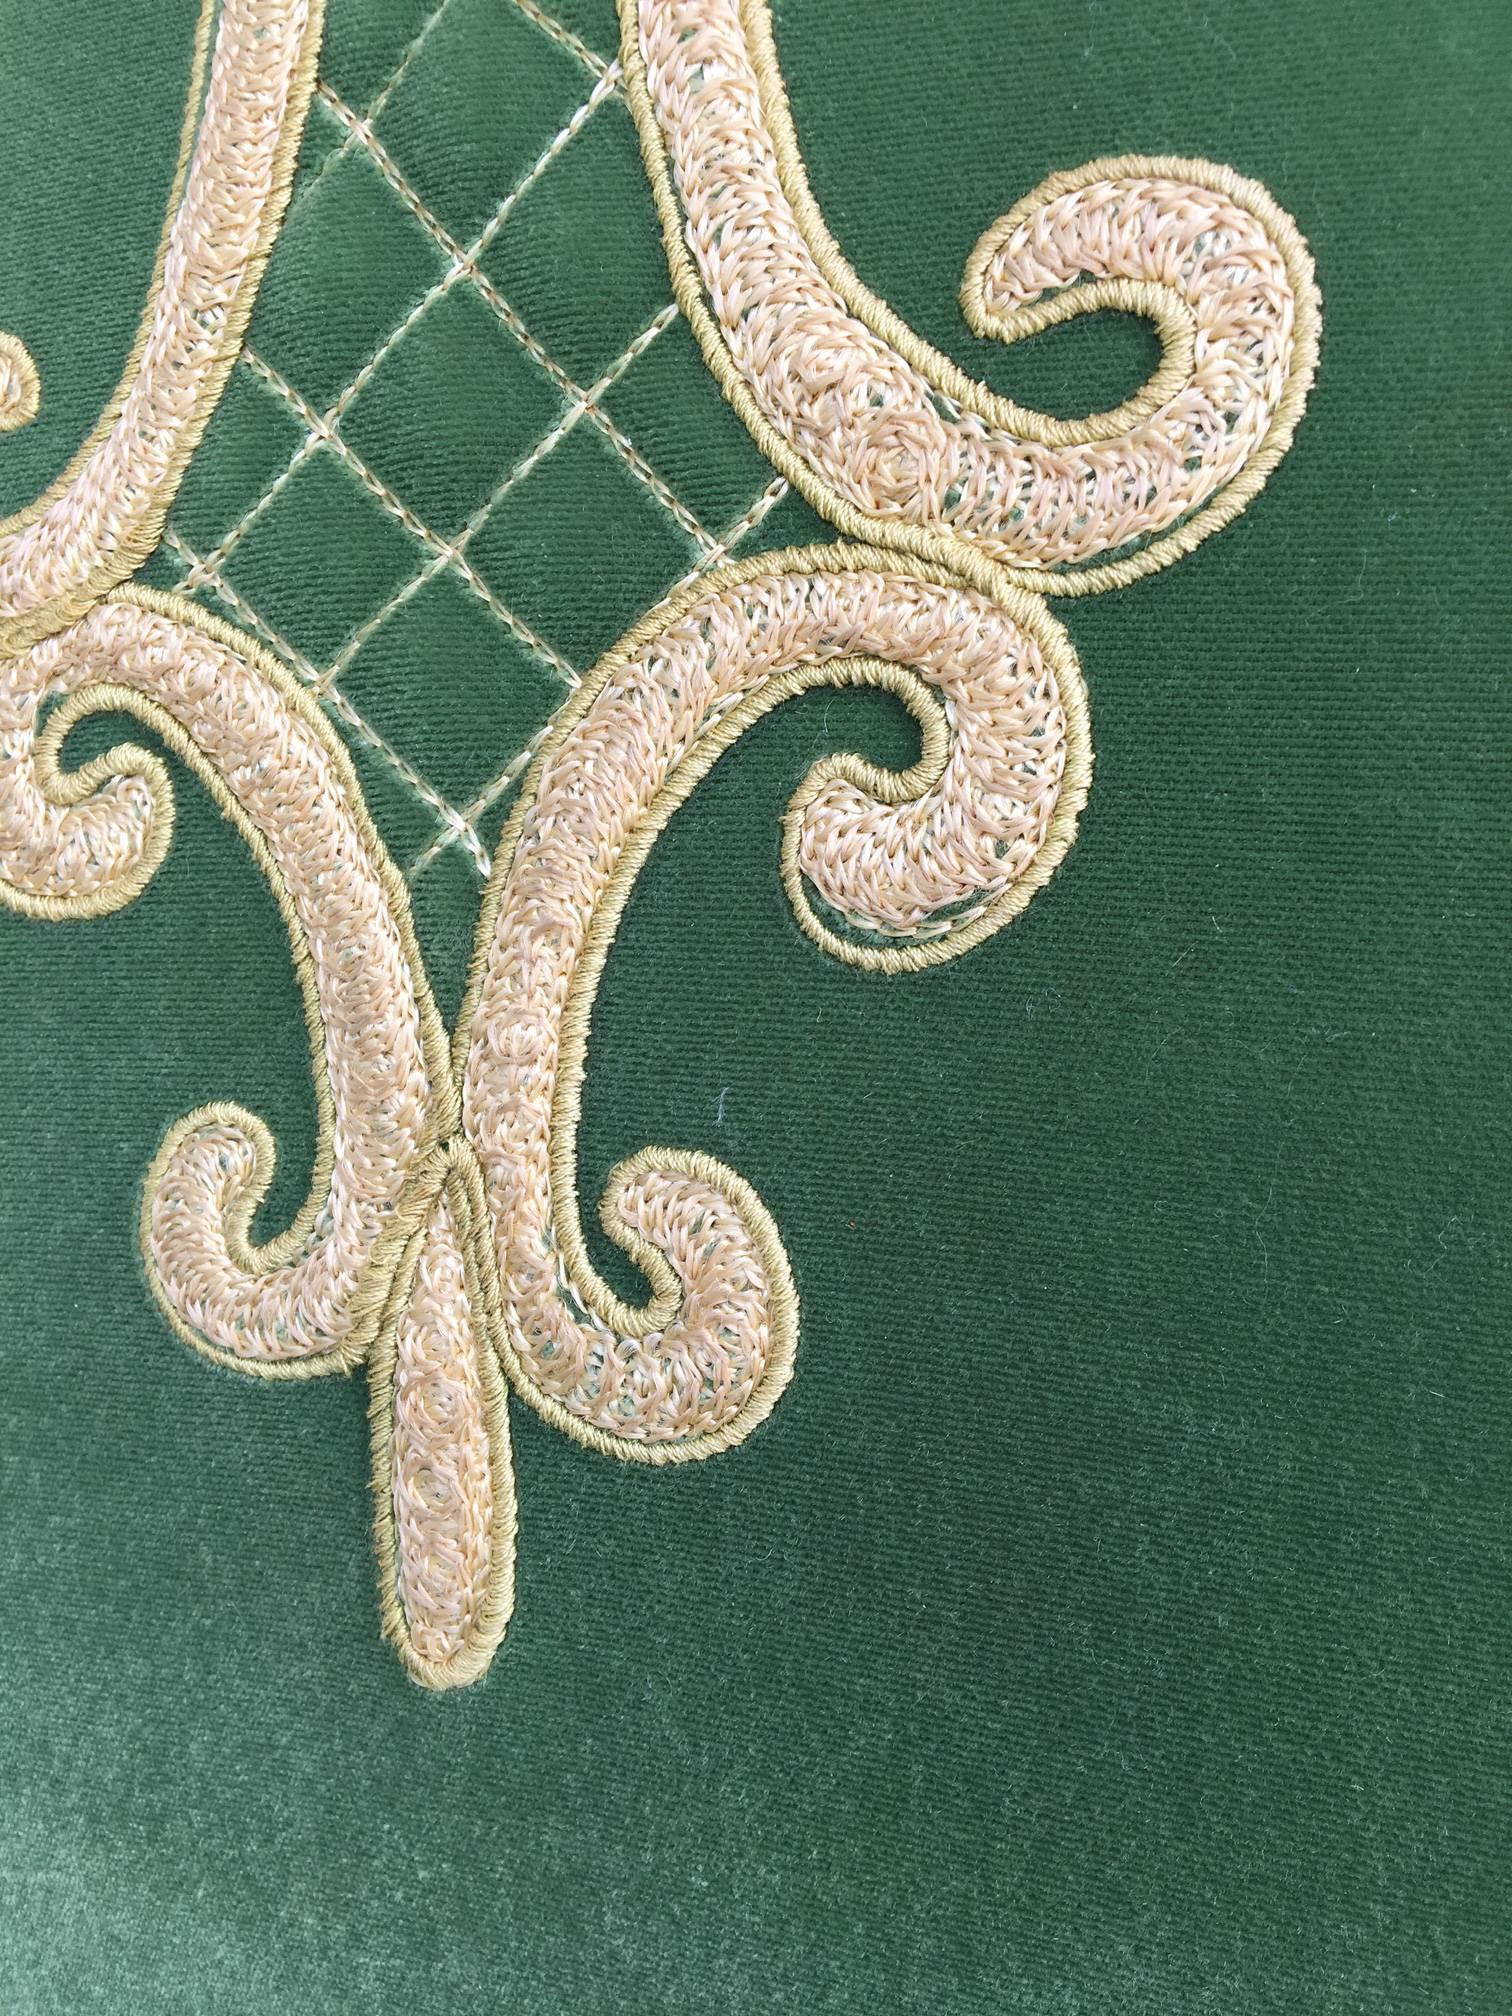 Dorothy Draper for Heritage Green Velvet Embroidered Dining Chairs 2